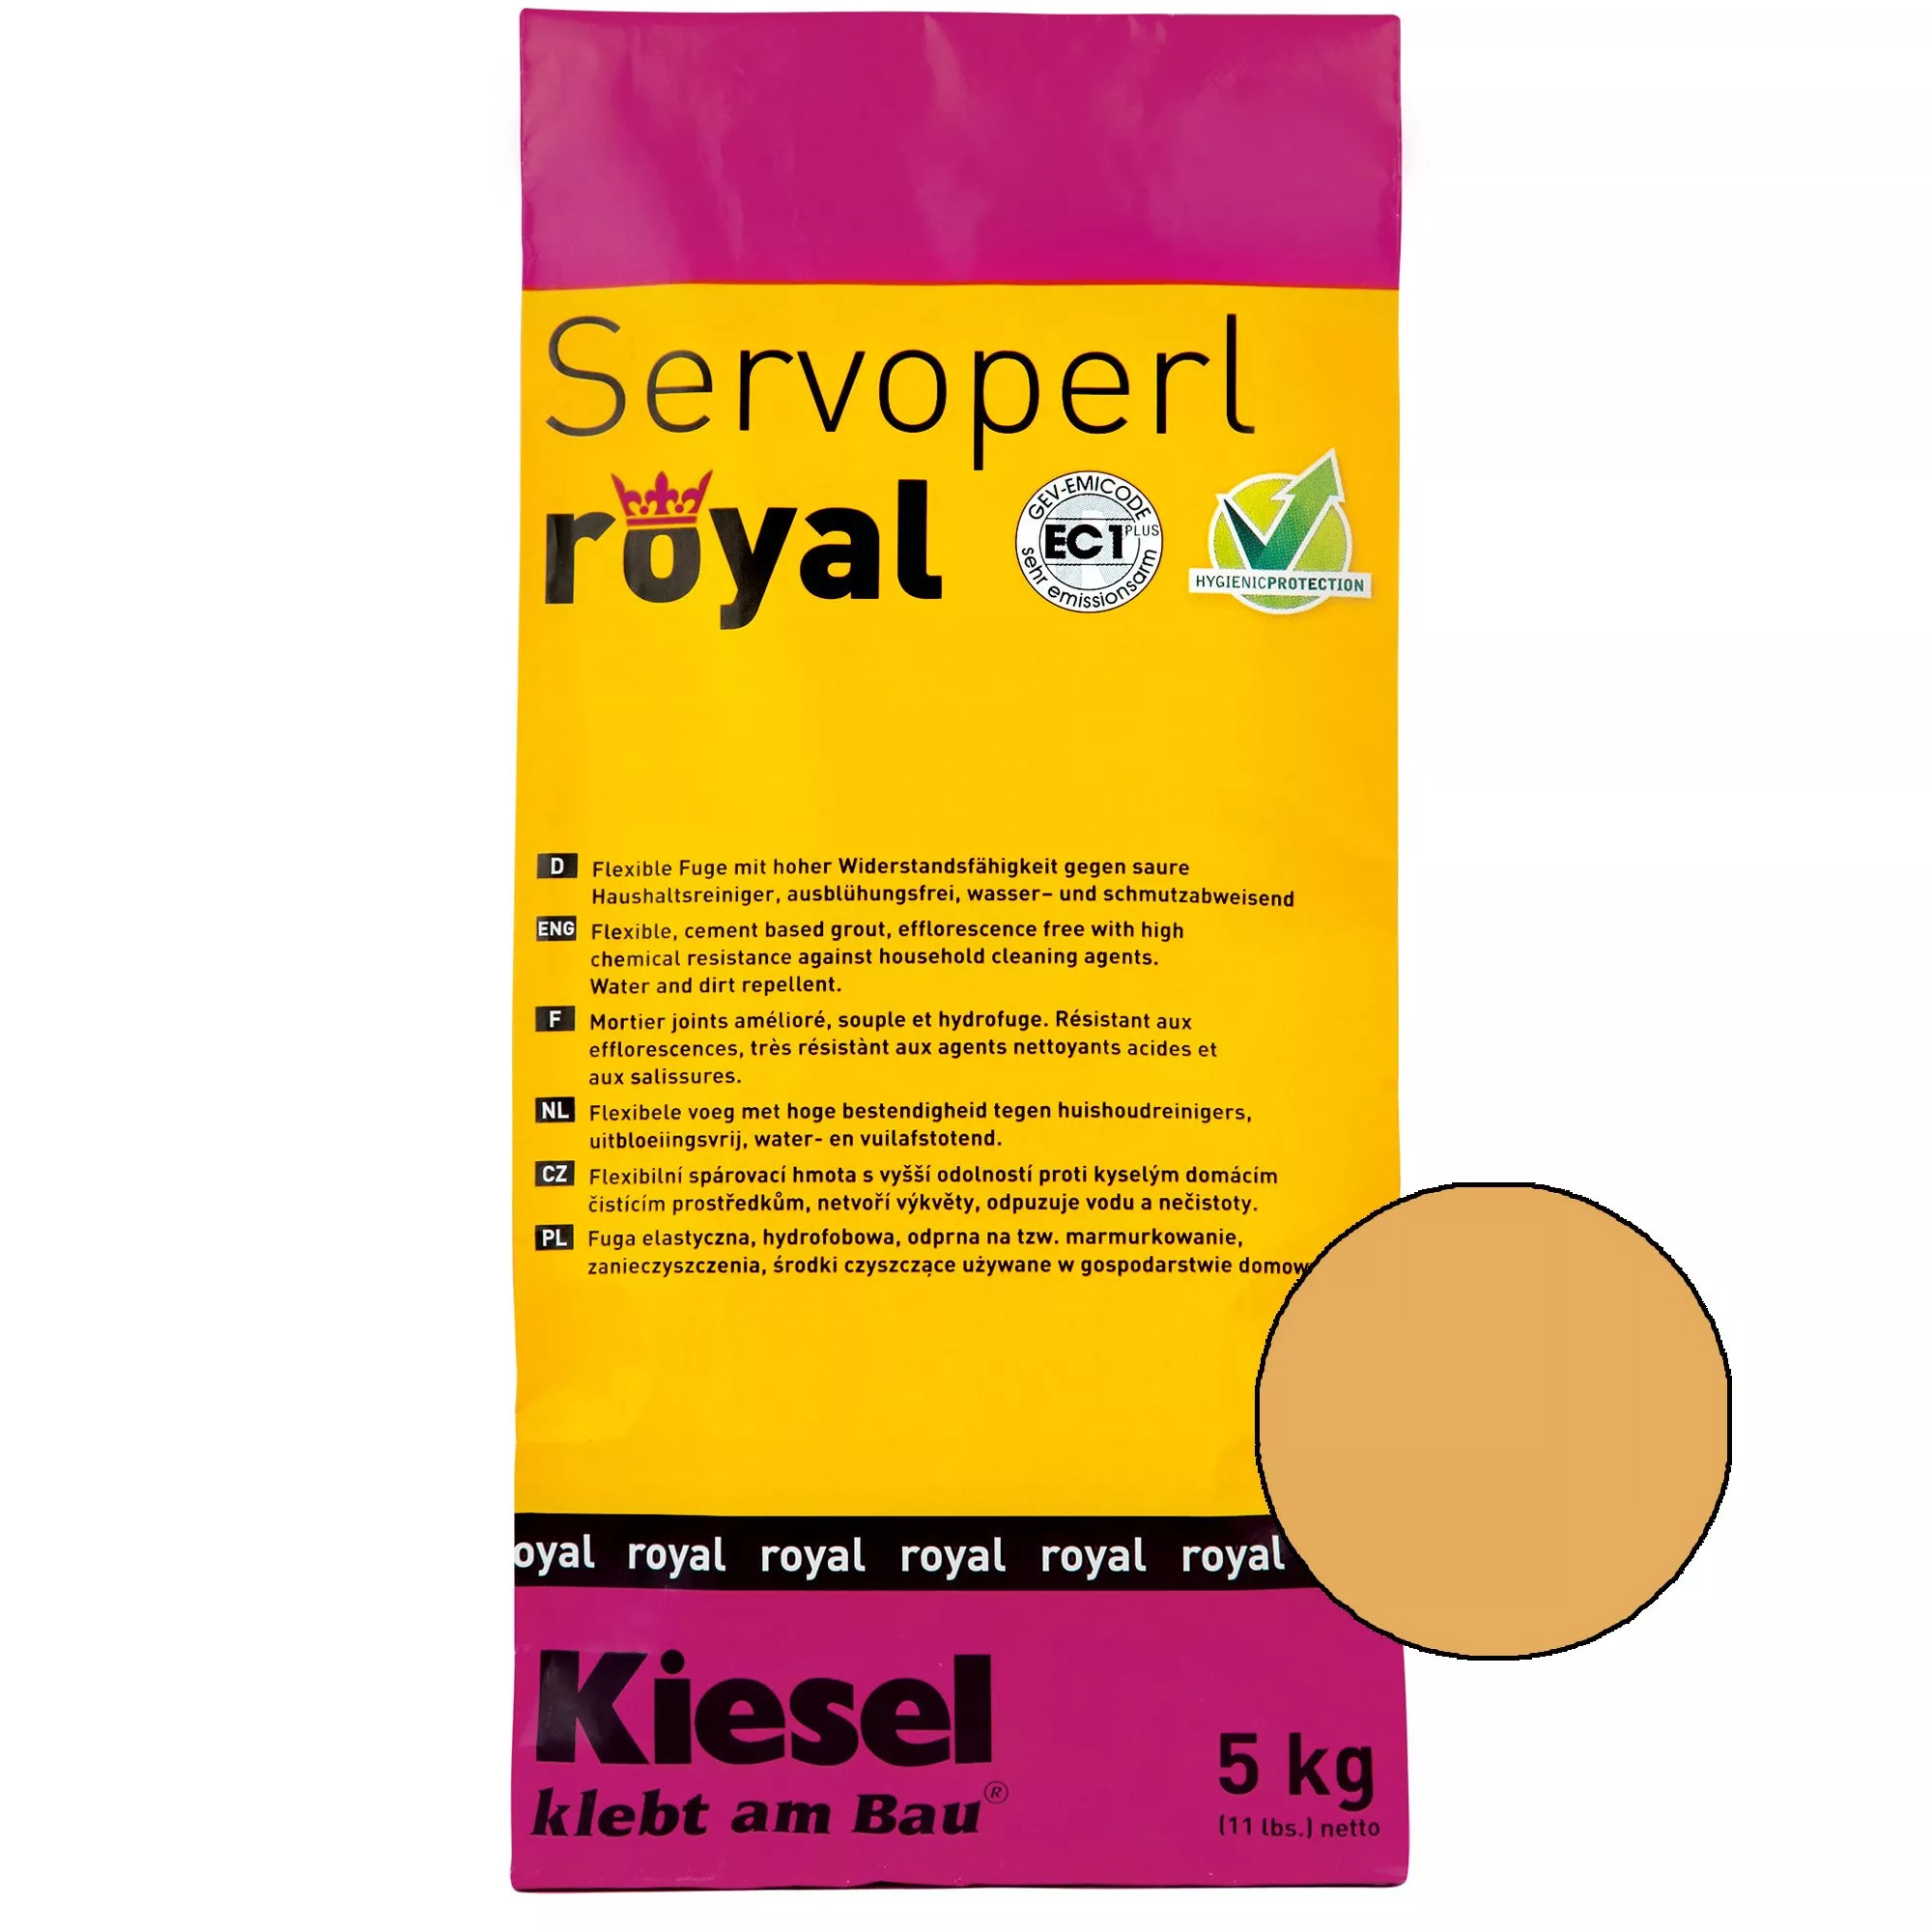 Kiesel Servoperl royal - Flexible, water- and dirt-repellent joint (5KG Sahara)